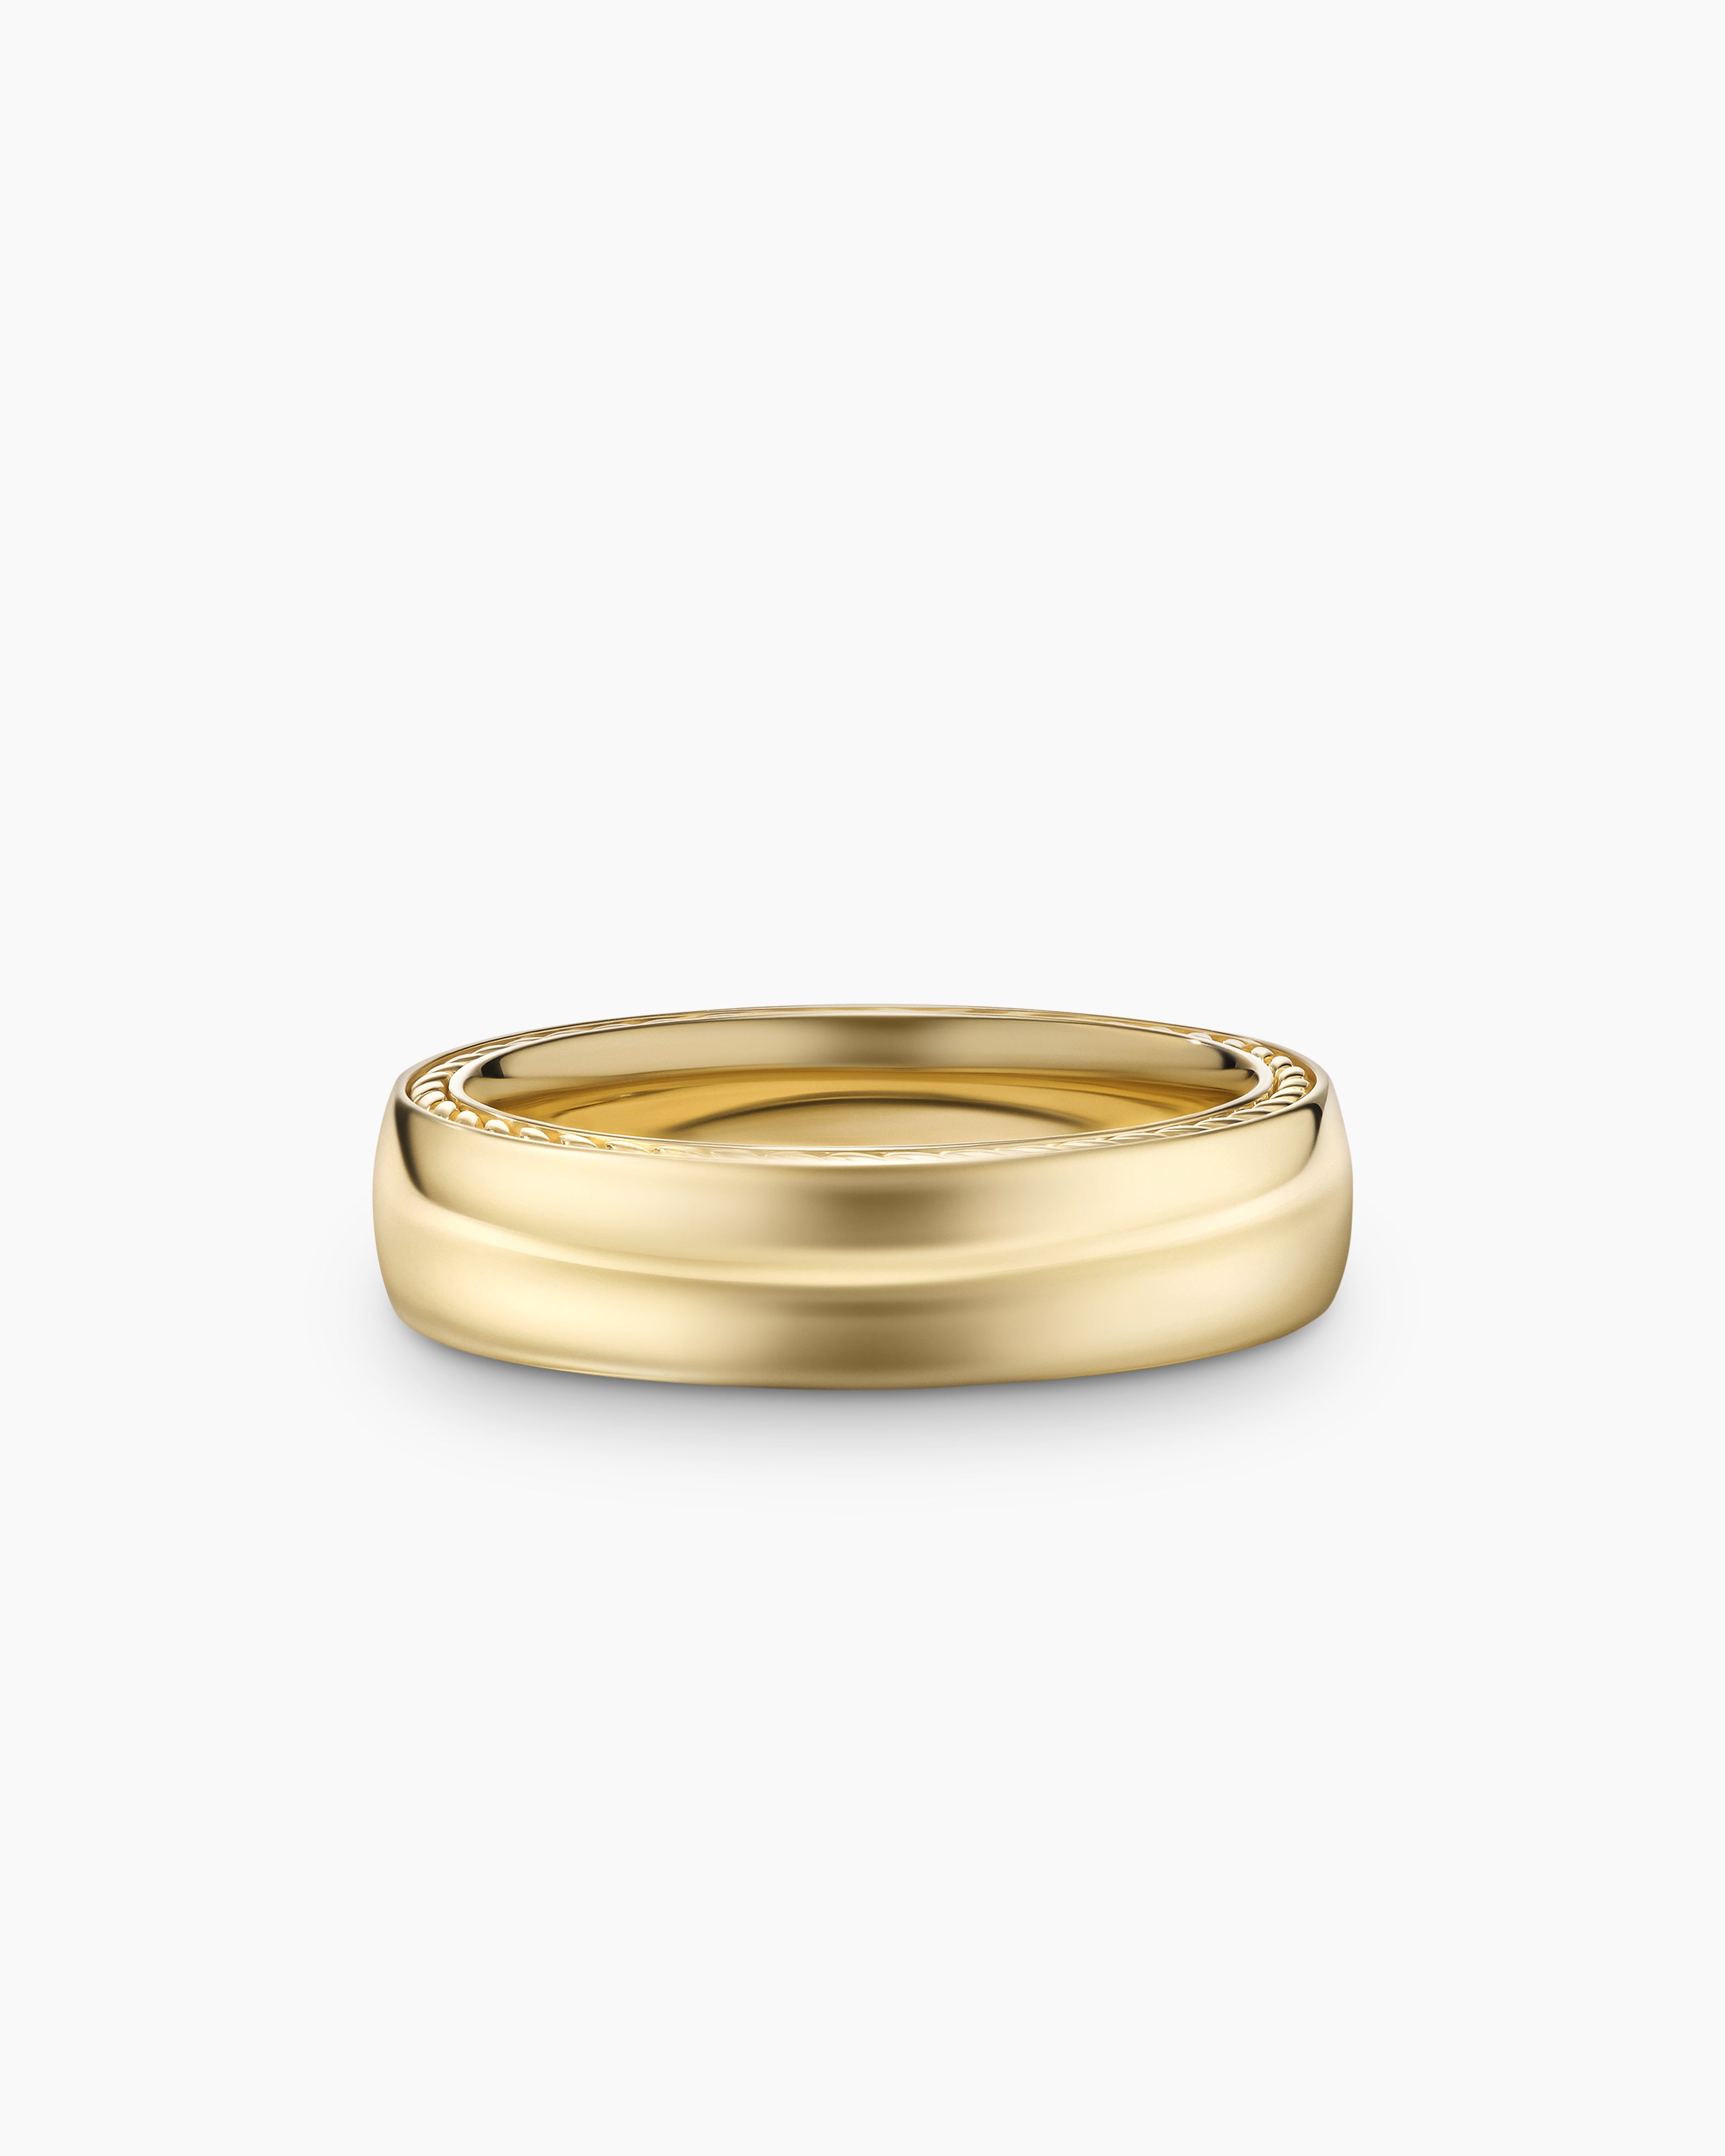 1.63 Carat 18K Gold Diamond Engagement Ring Center=1.25 Carat F-SI1 Value=$15K+  | eBay